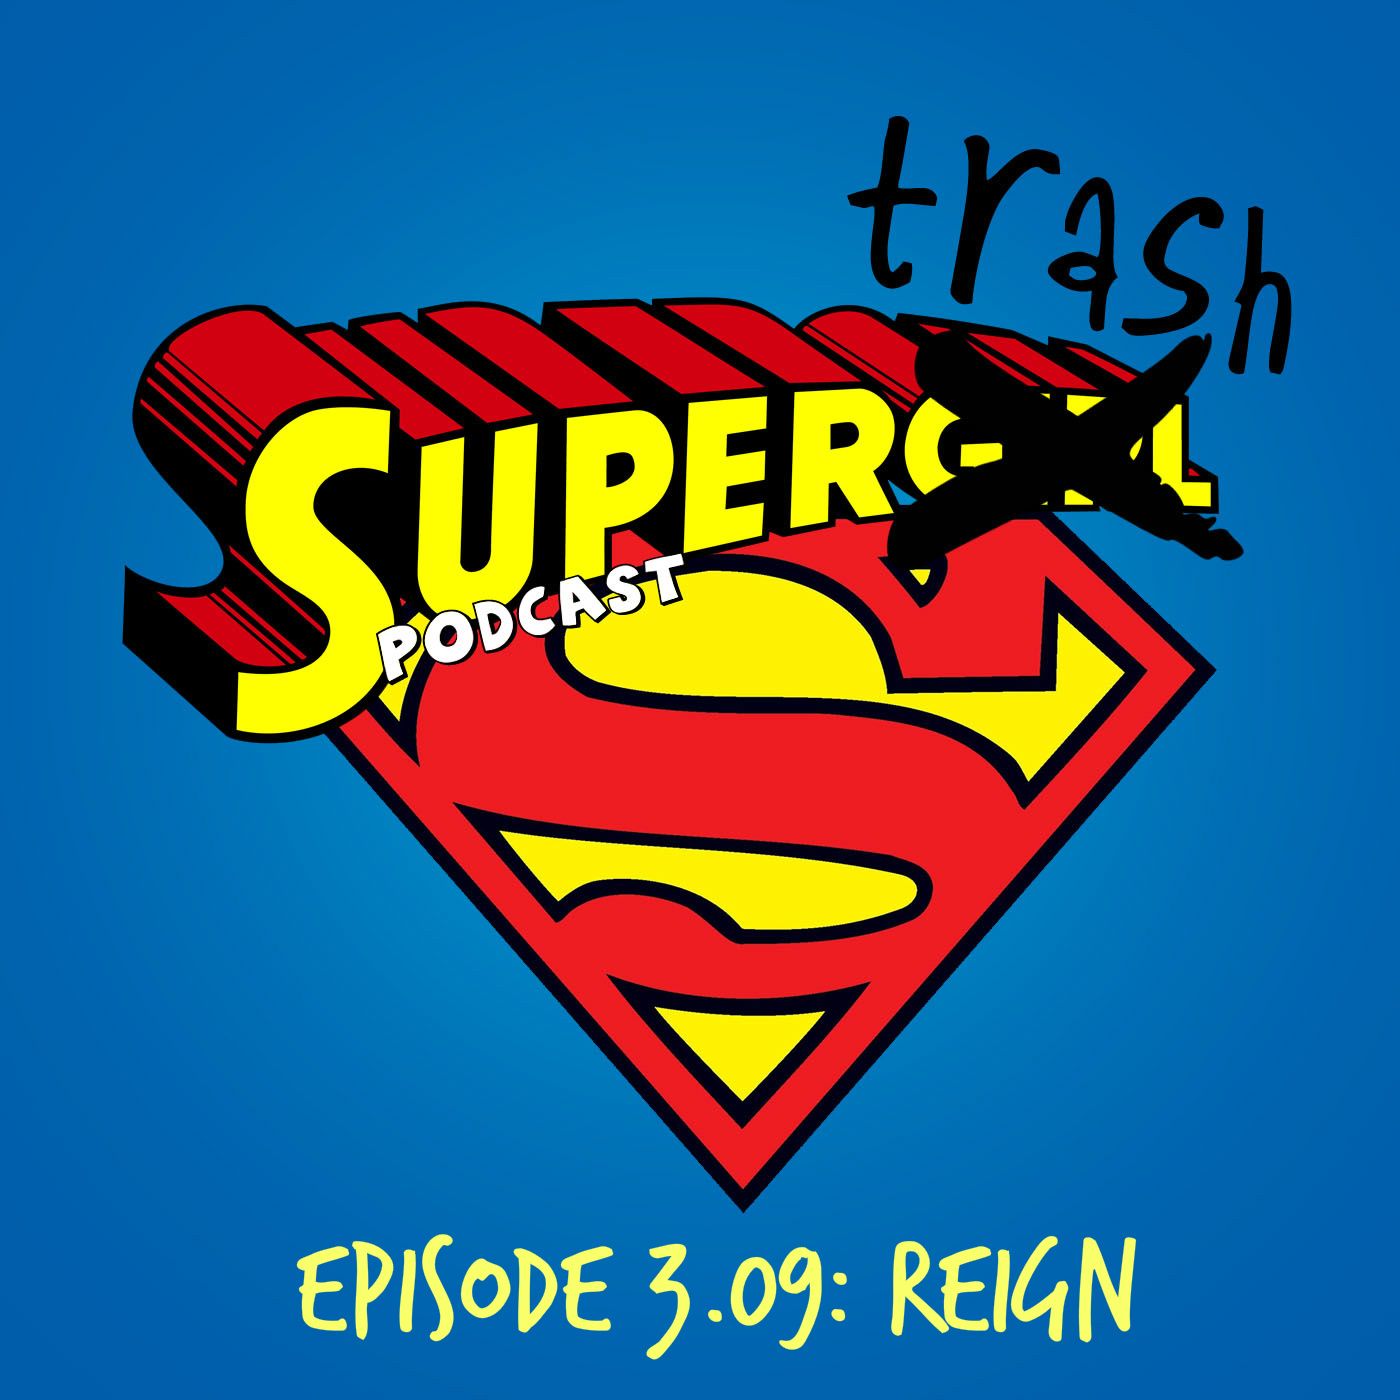 ’Supergirl’ Episode 3.09 ”Reign”